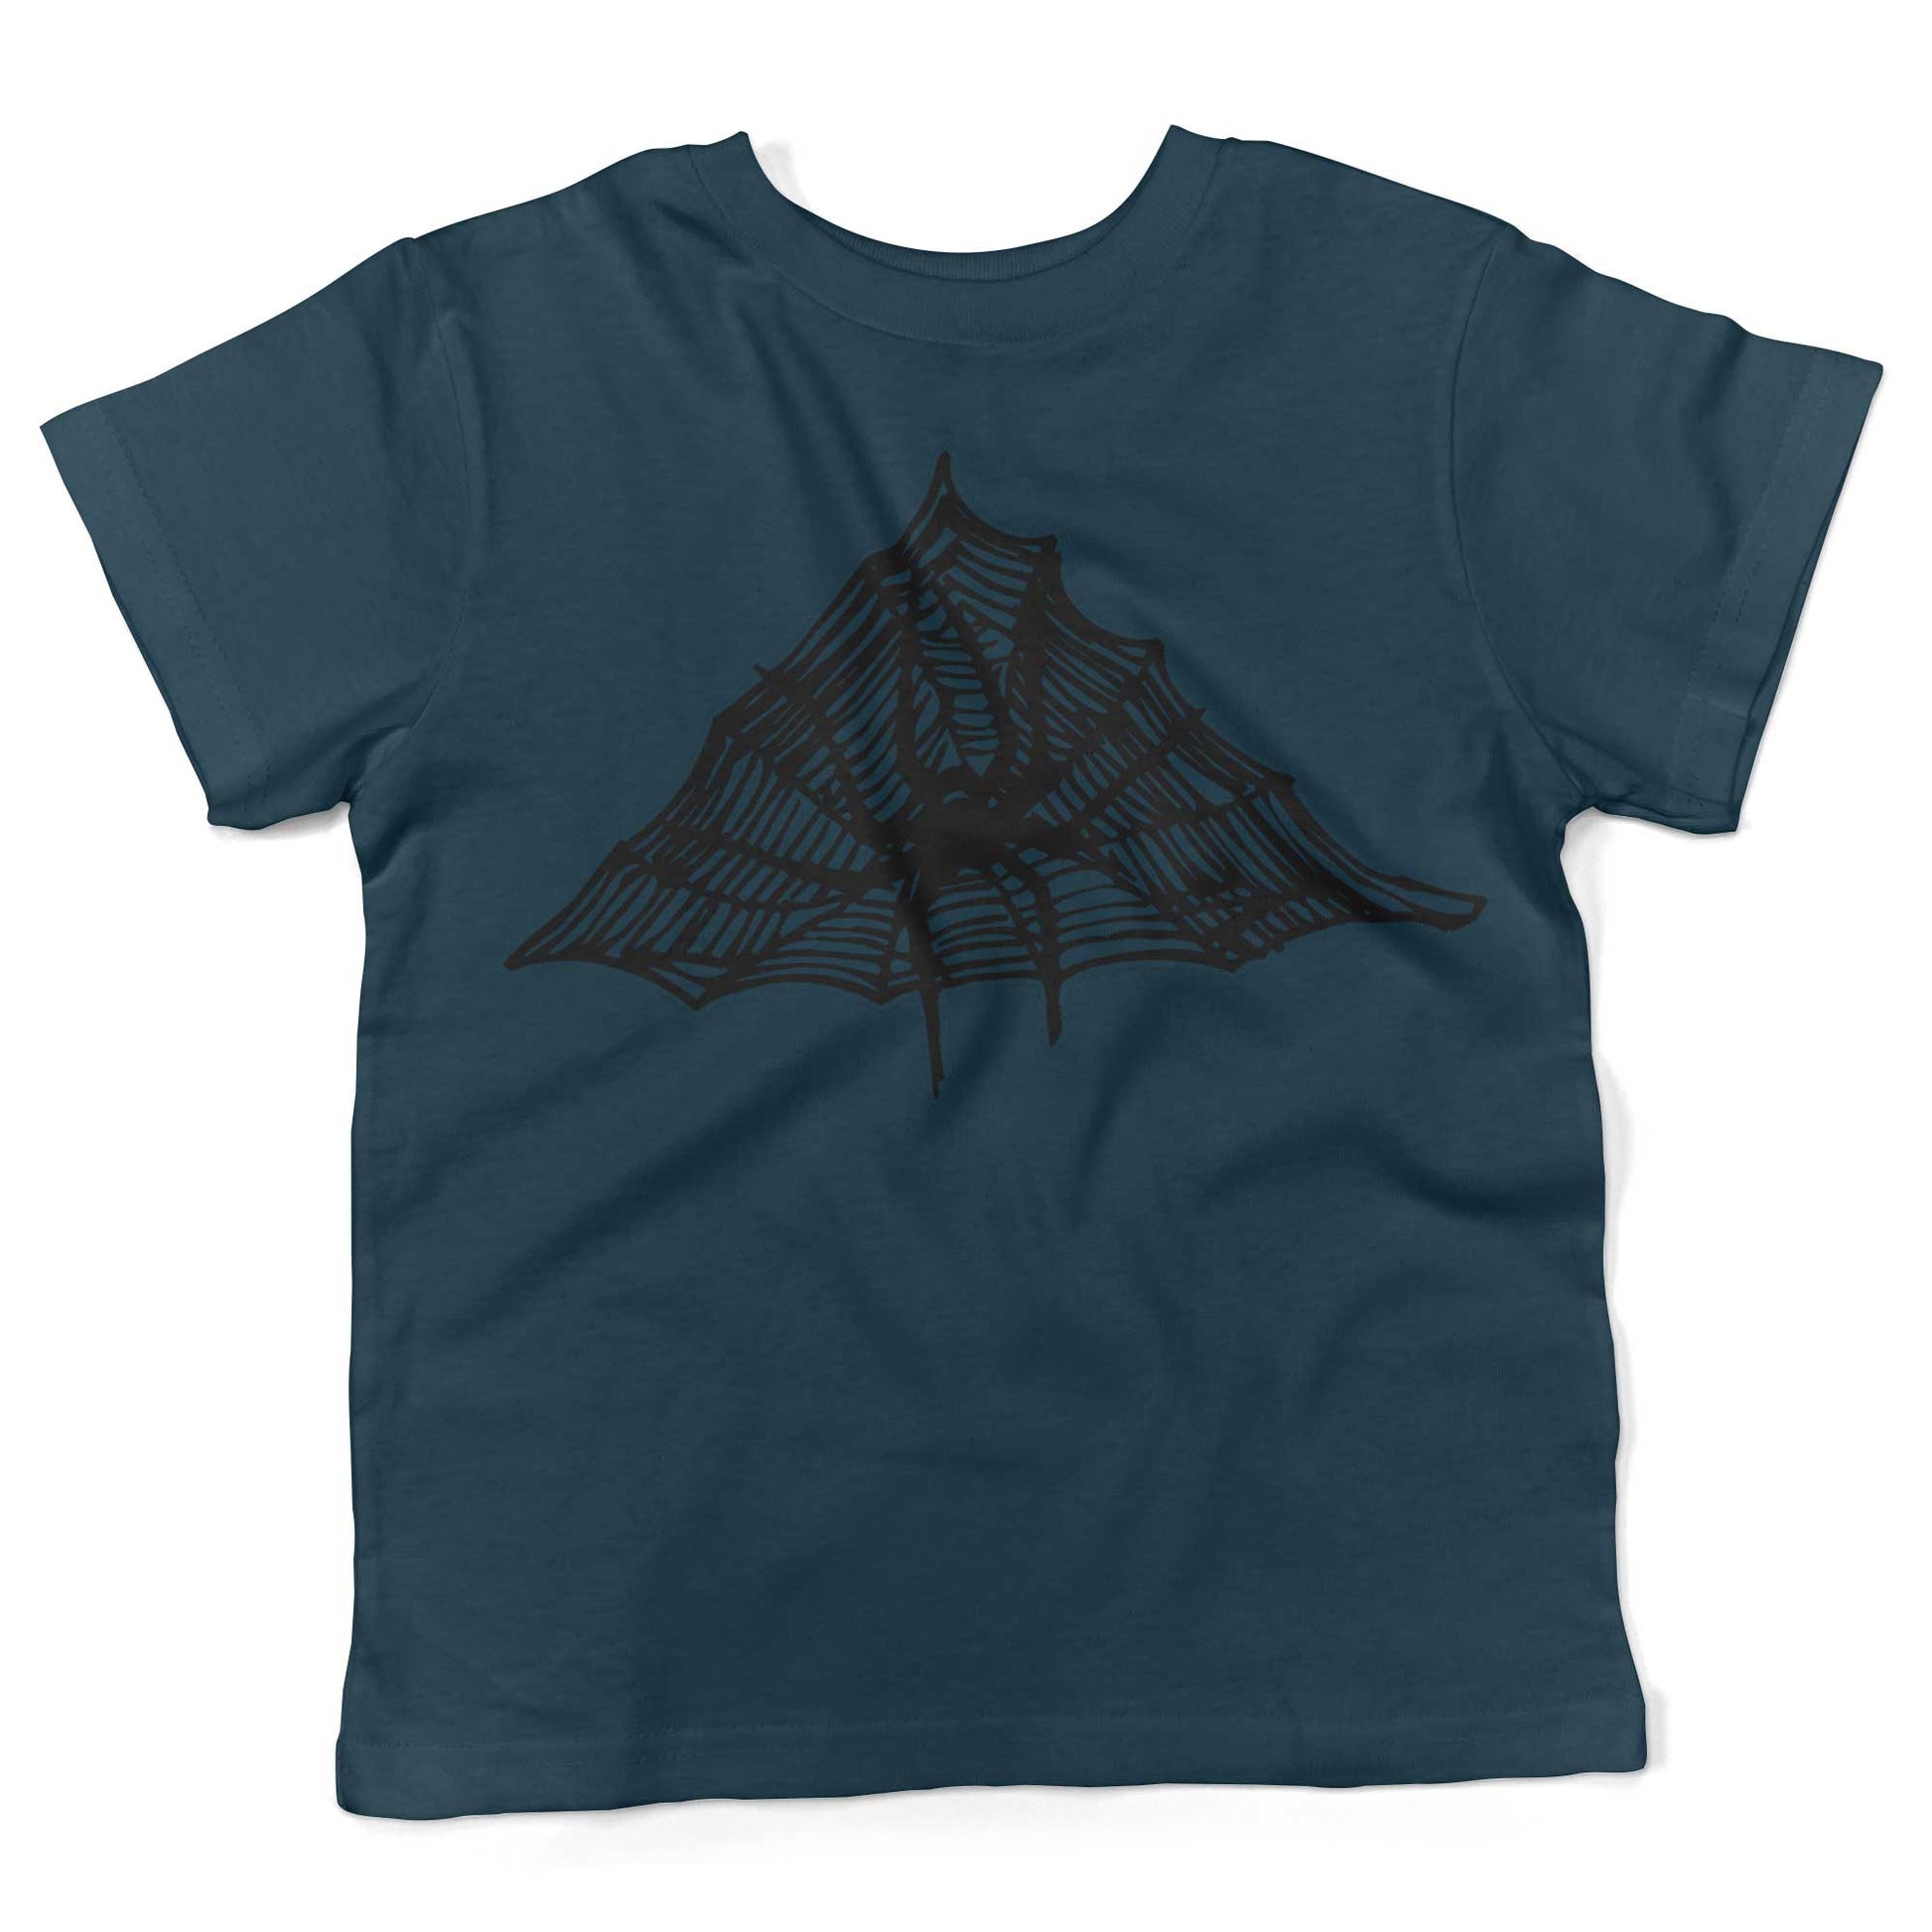 Spiderweb Toddler Shirt-Organic Pacific Blue-2T